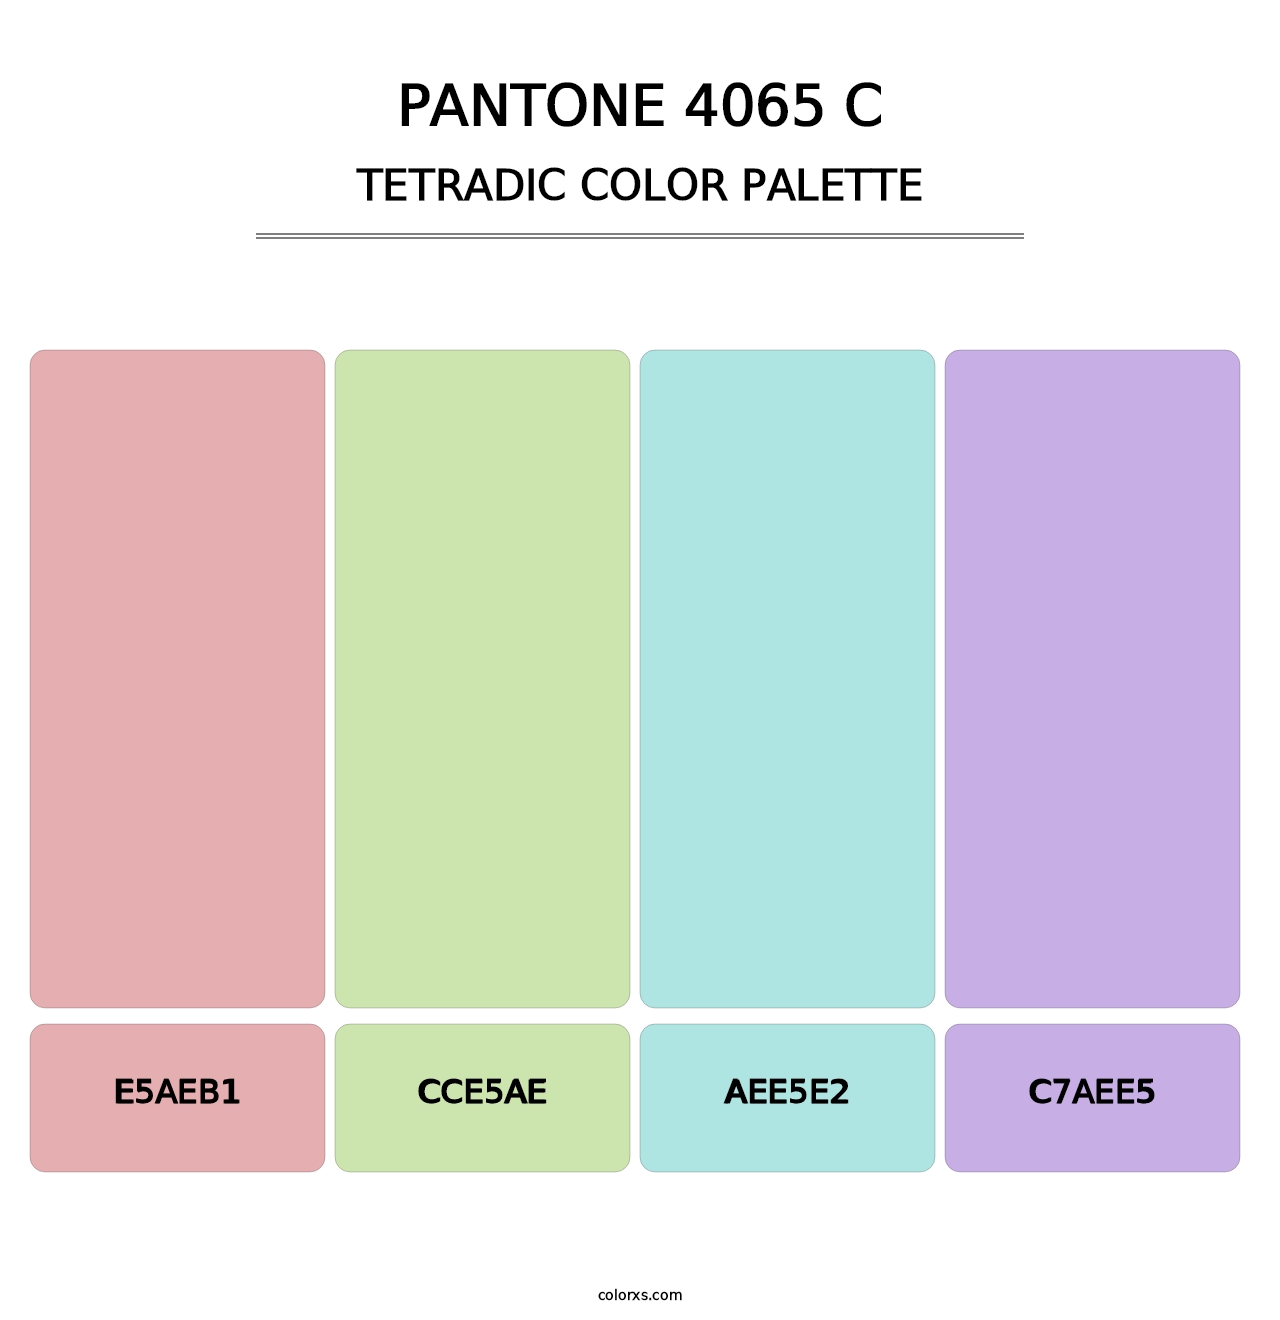 PANTONE 4065 C - Tetradic Color Palette